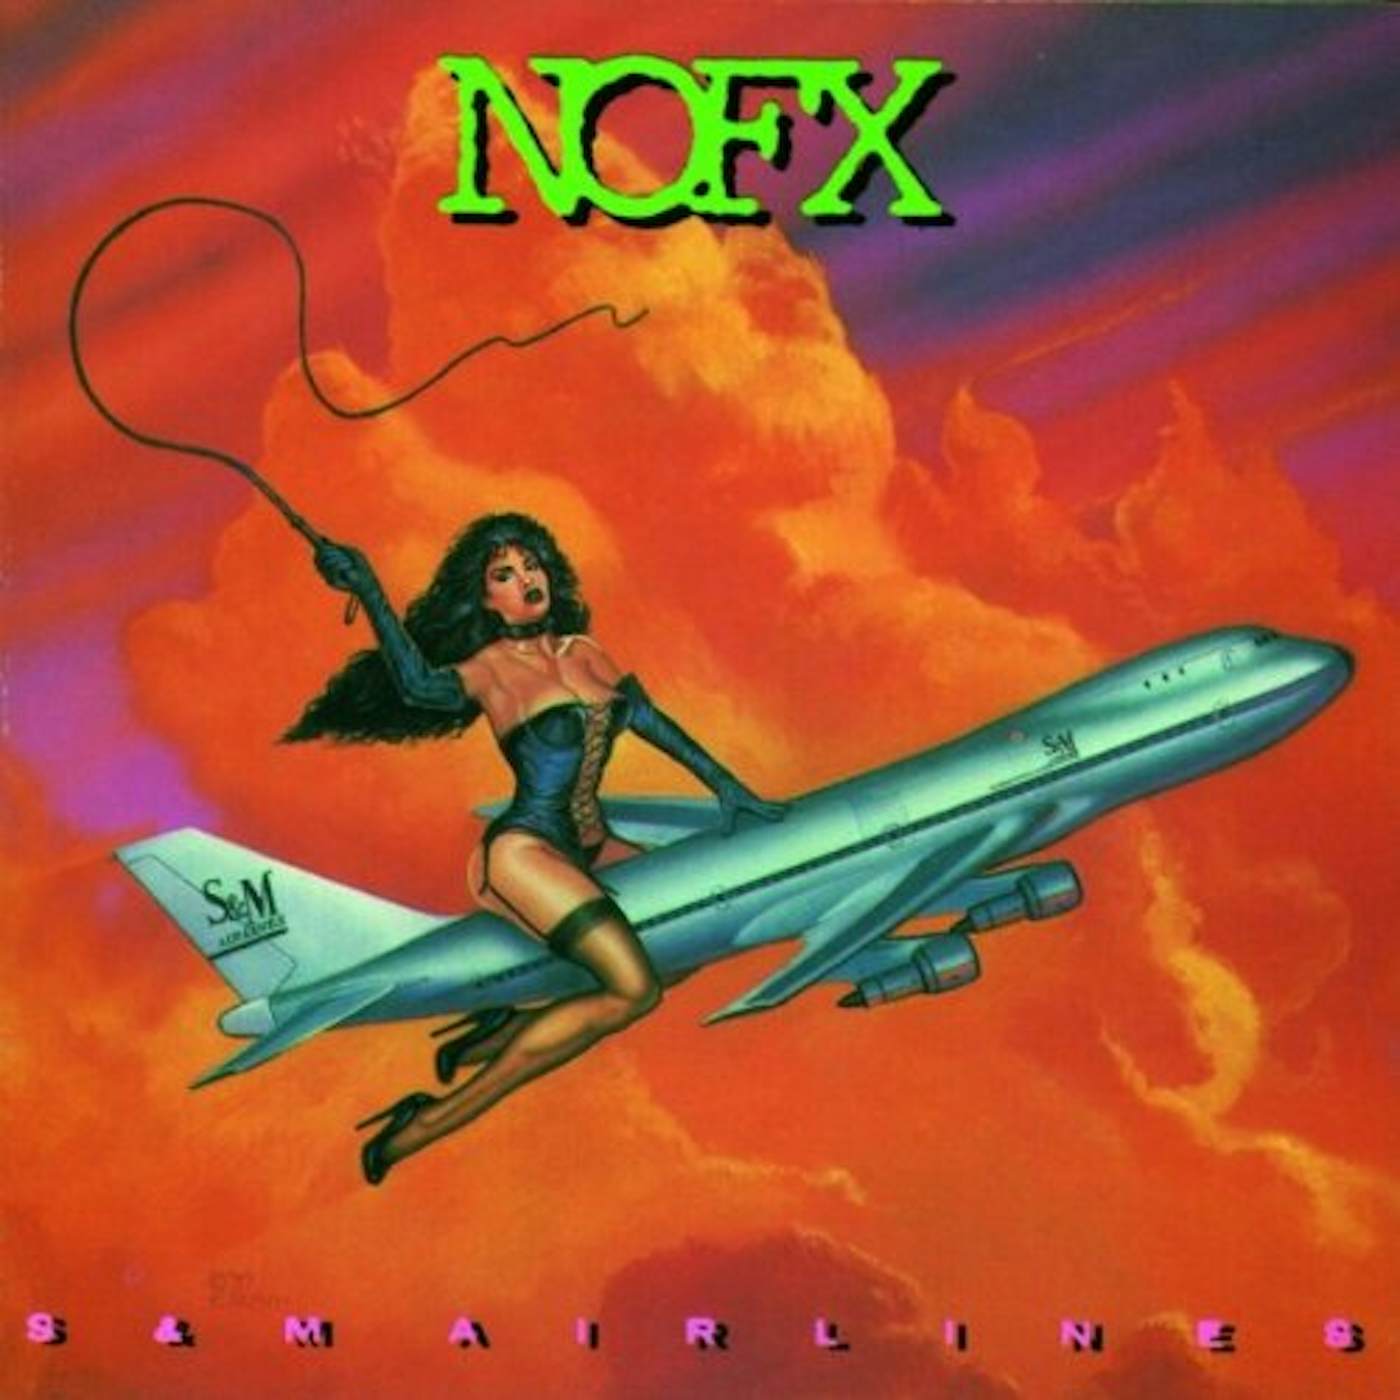 NOFX S & M Airlines Vinyl Record